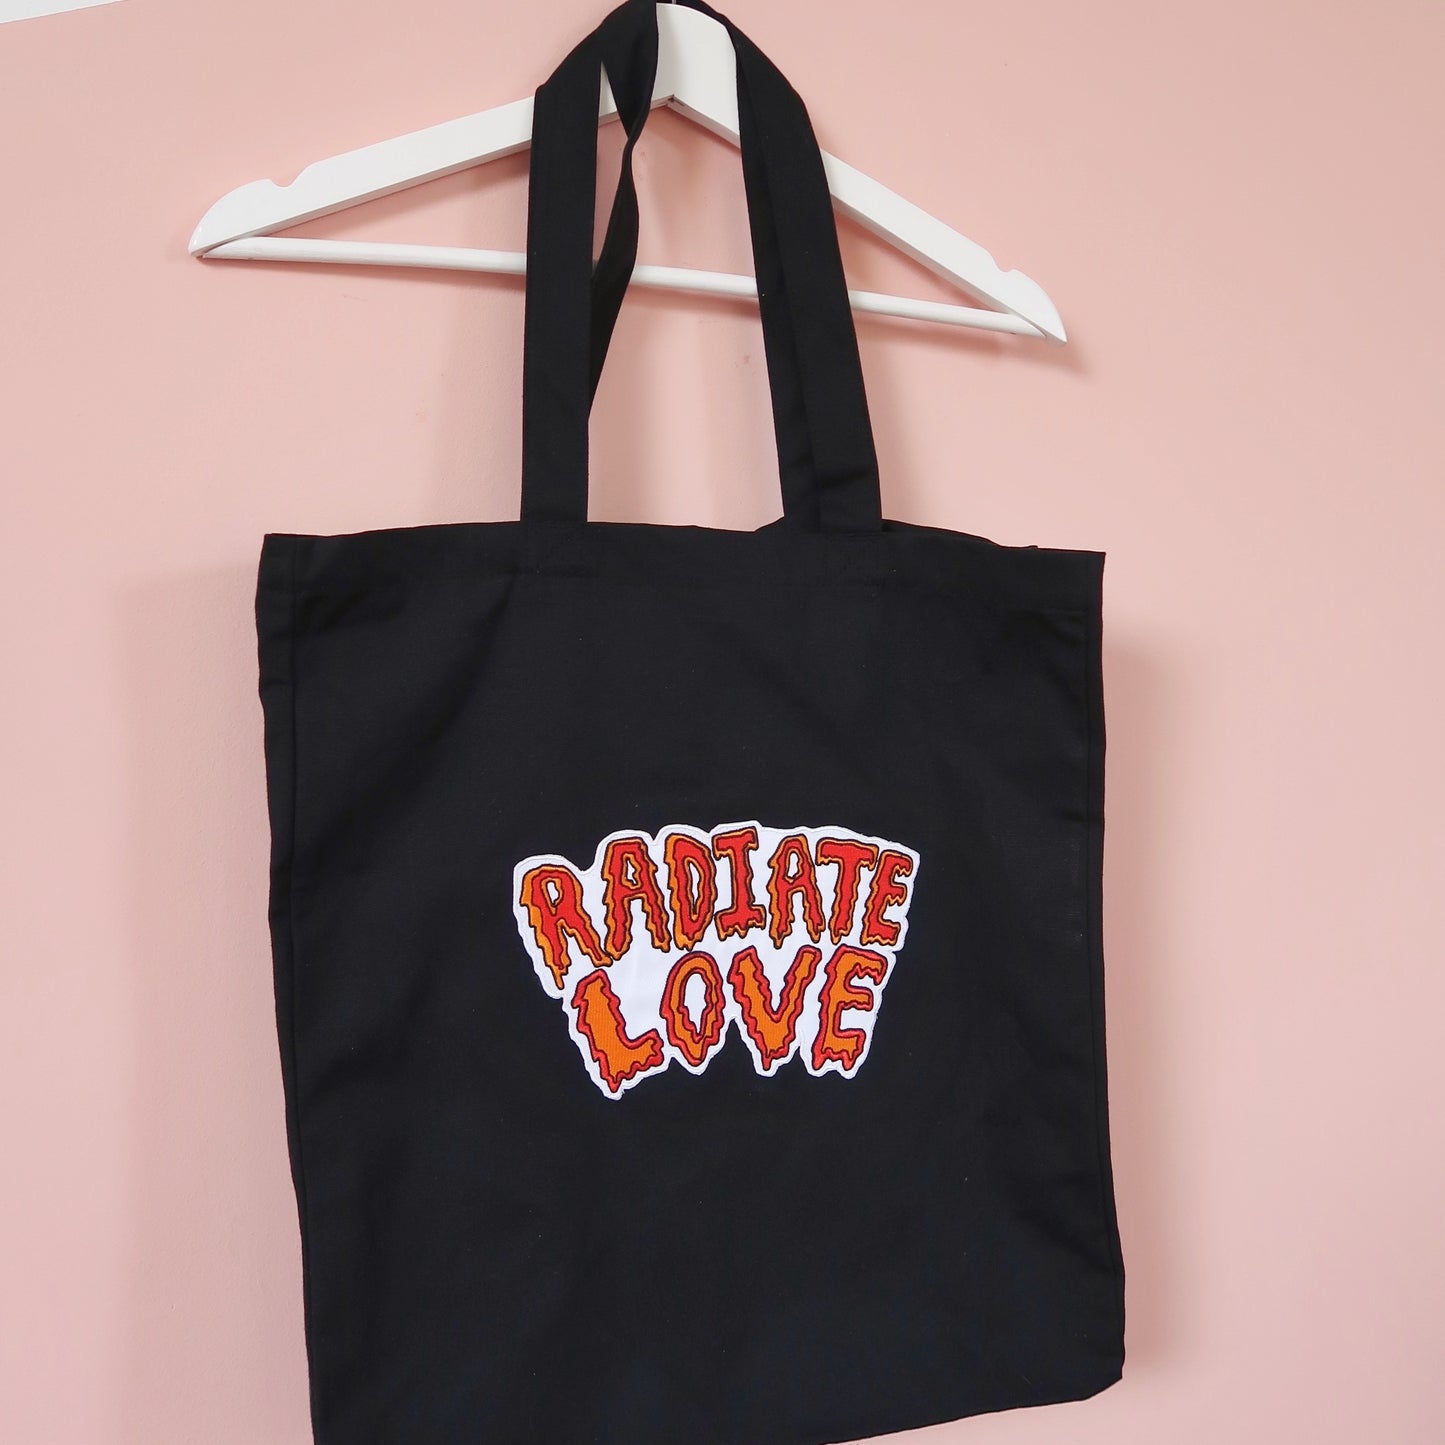 radiate love large tote bag - black